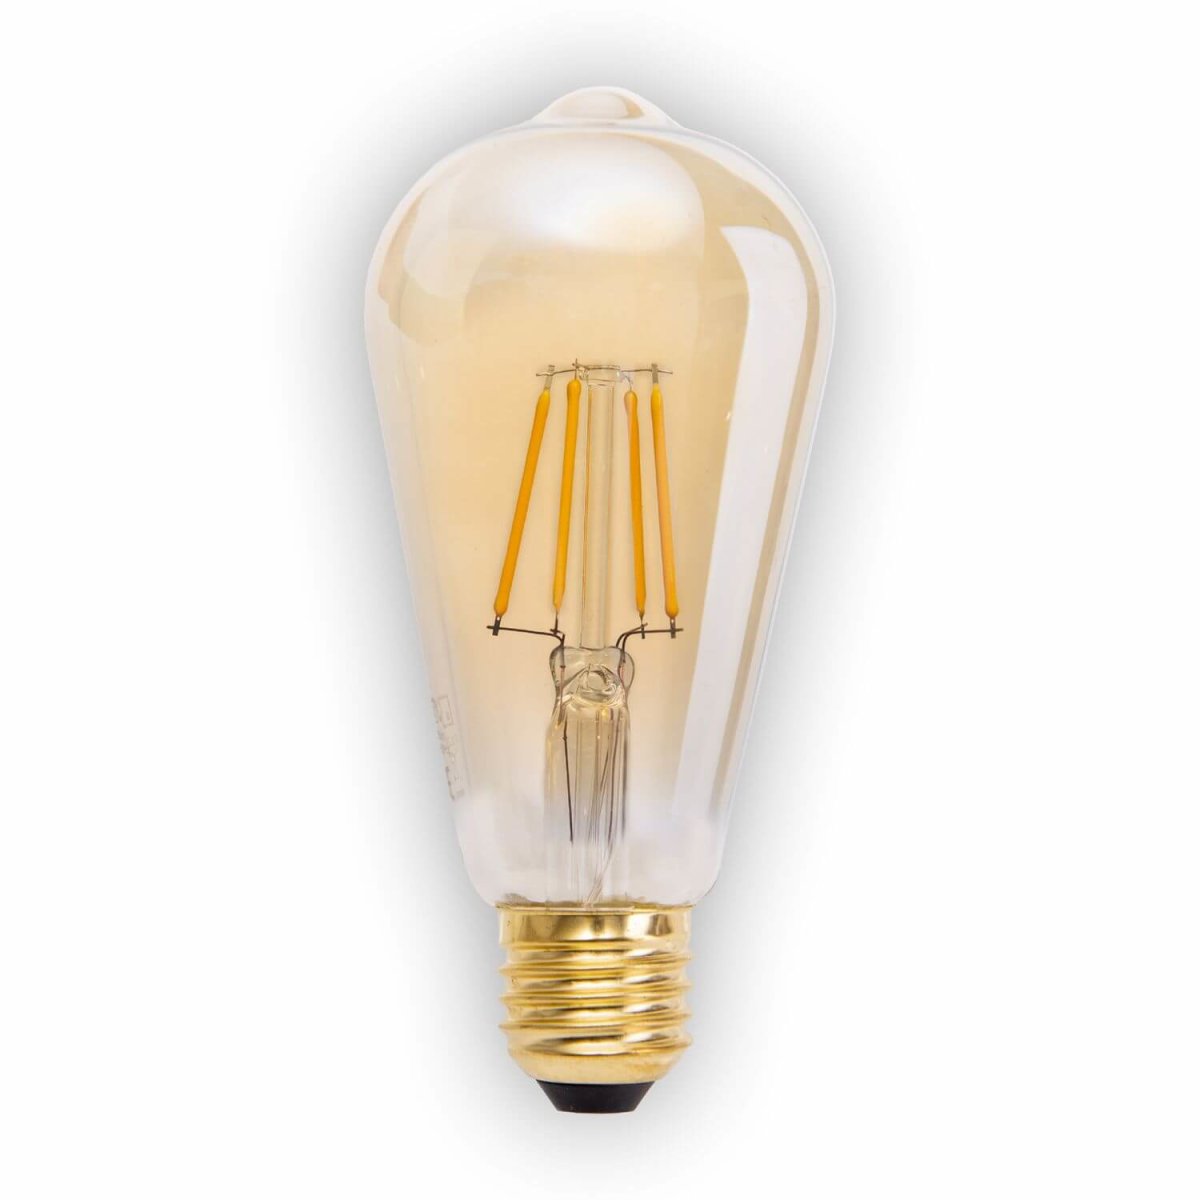 Näve LED Leuchtmittel LED LAMPE dimmbar Warmweiss 4106804 Ø6,4cm weiß